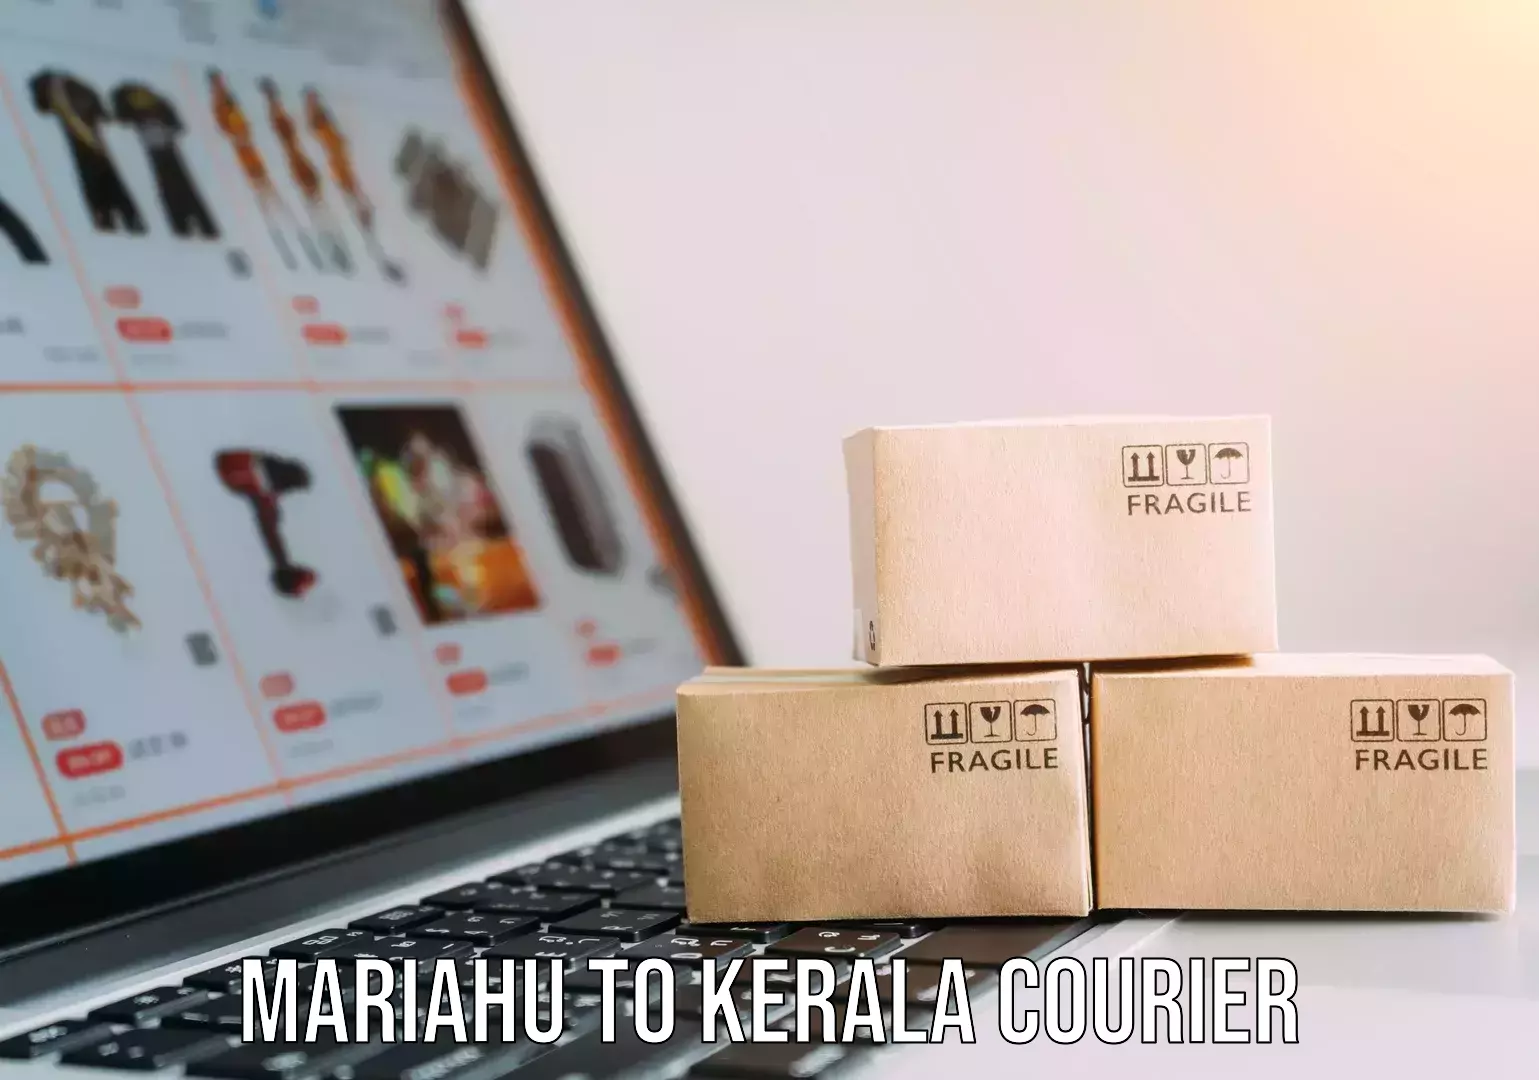 Professional furniture moving Mariahu to Kerala